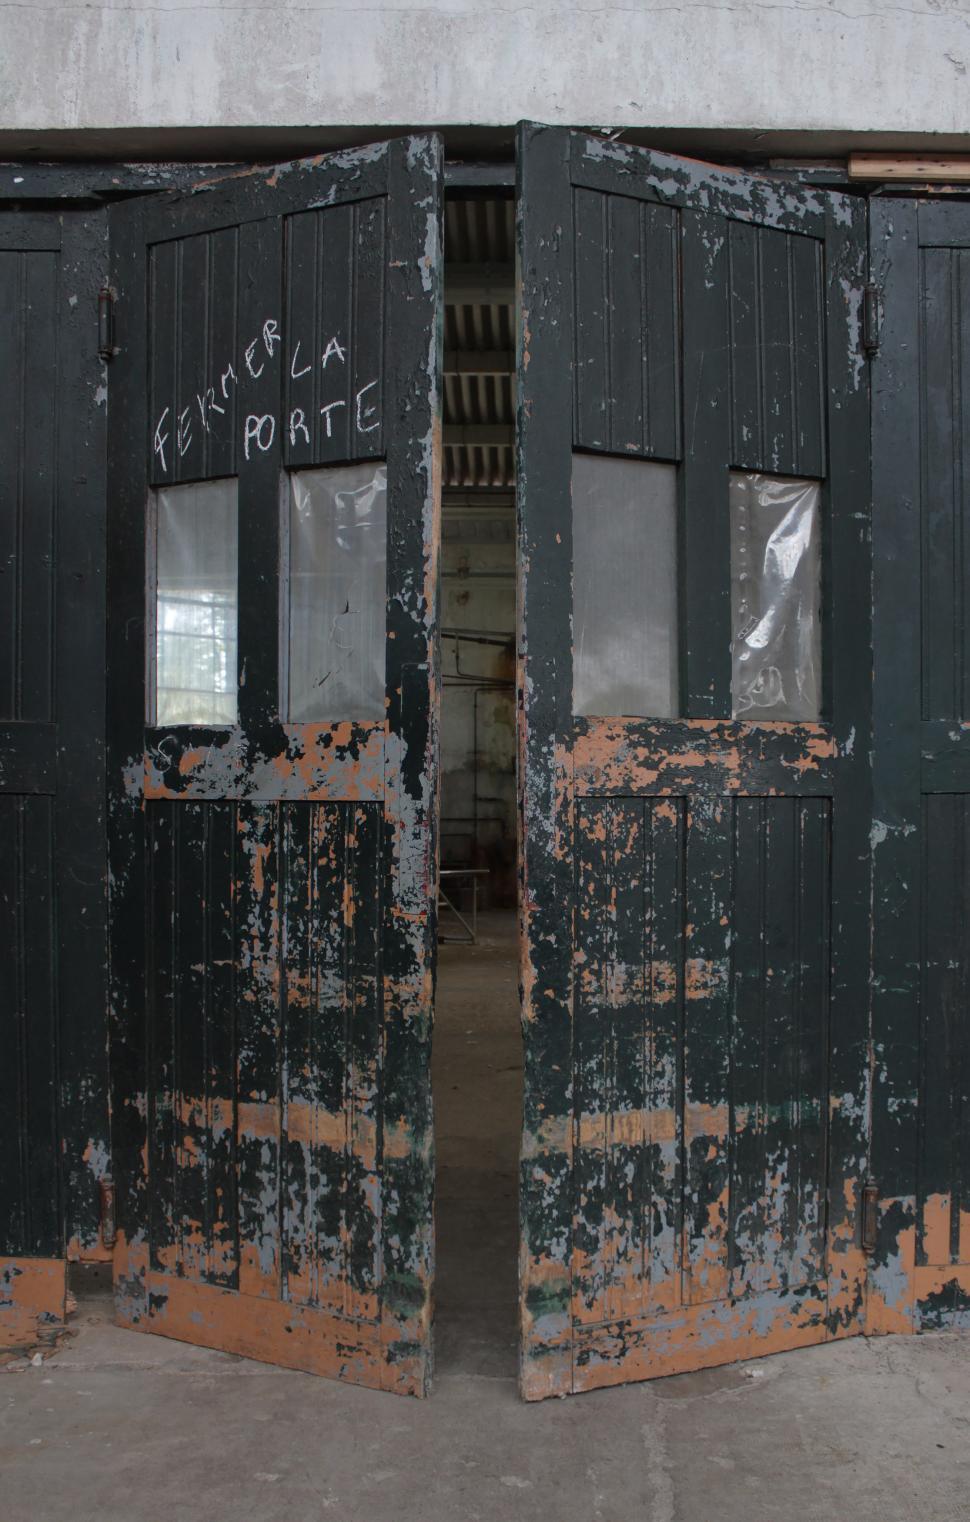 Free Image of Two Black Doors Inside Building 